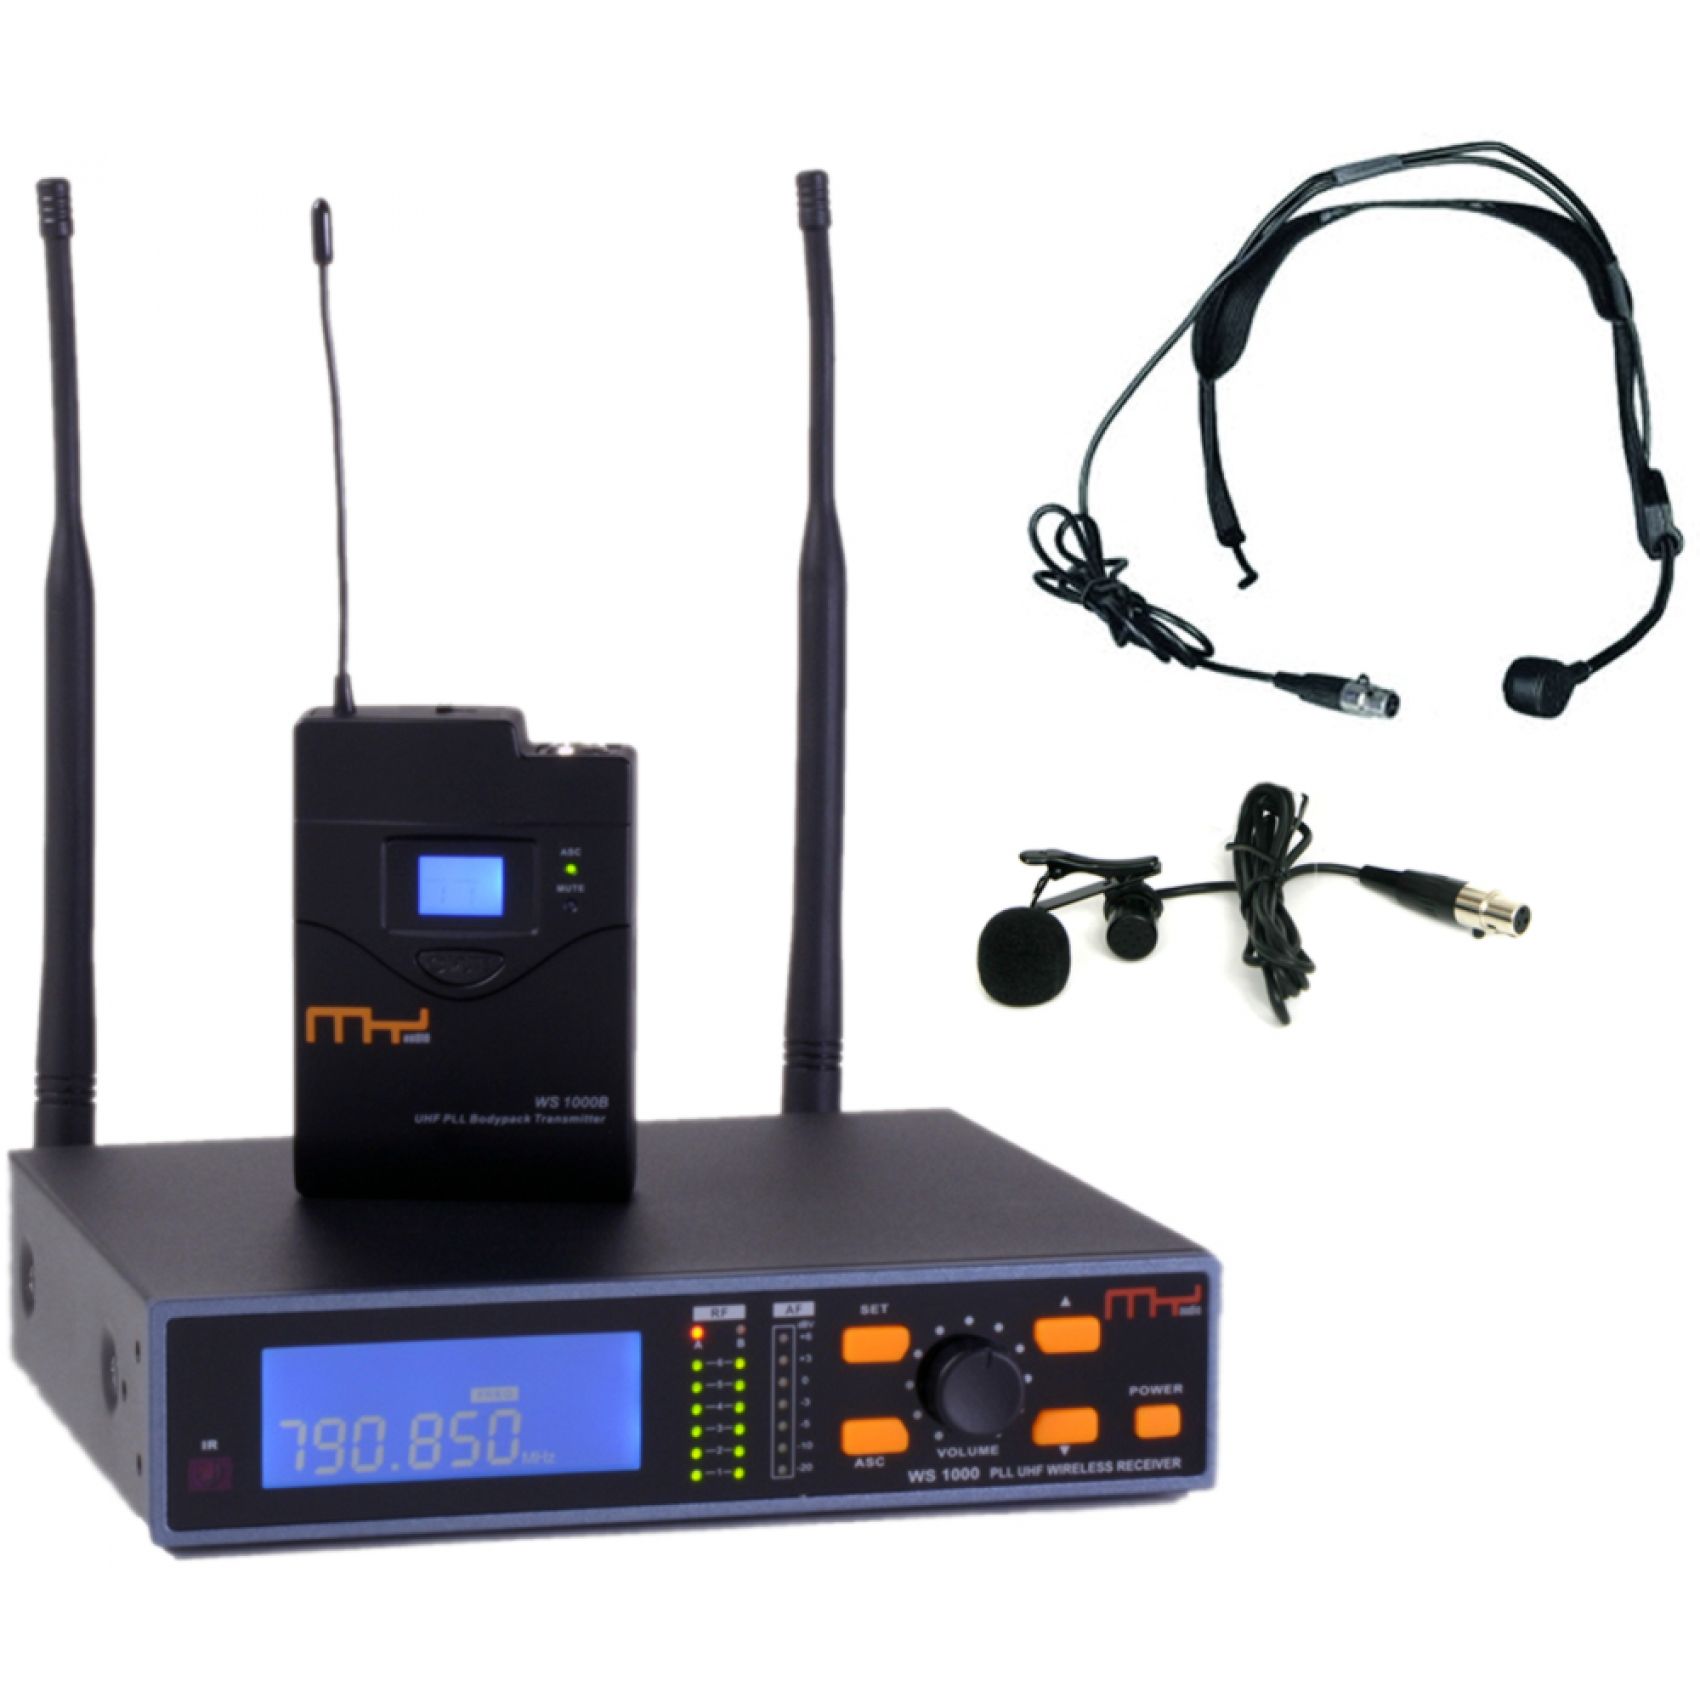 MyAudio WS1000SET + HT-1C - SISTEMA WIRELESS UHF CON ARCHETTO E